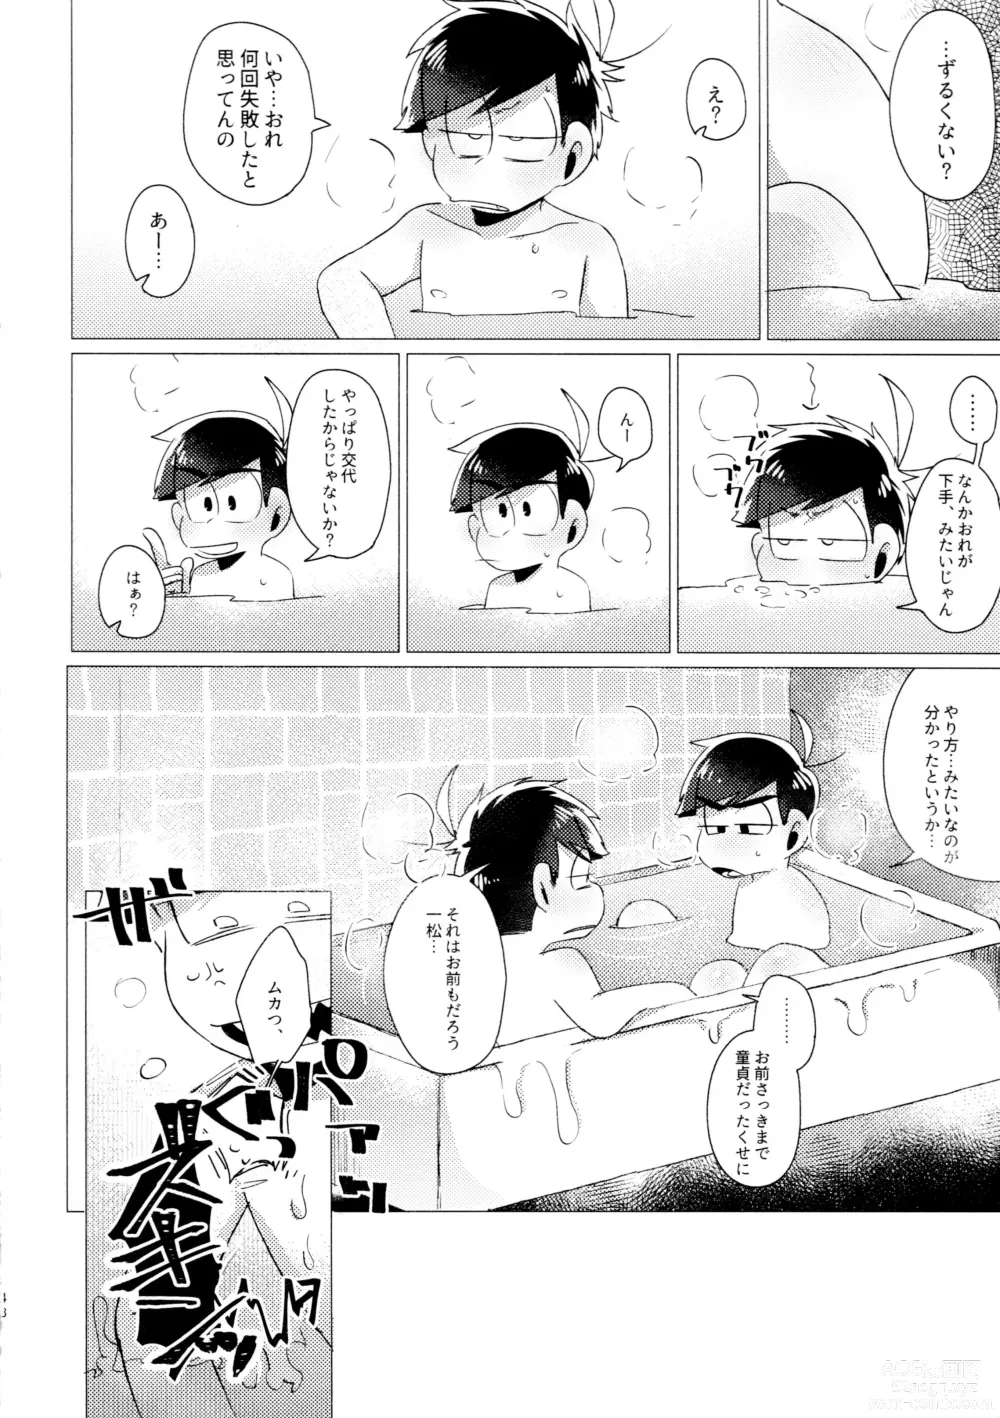 Page 48 of doujinshi Furachina Bokura